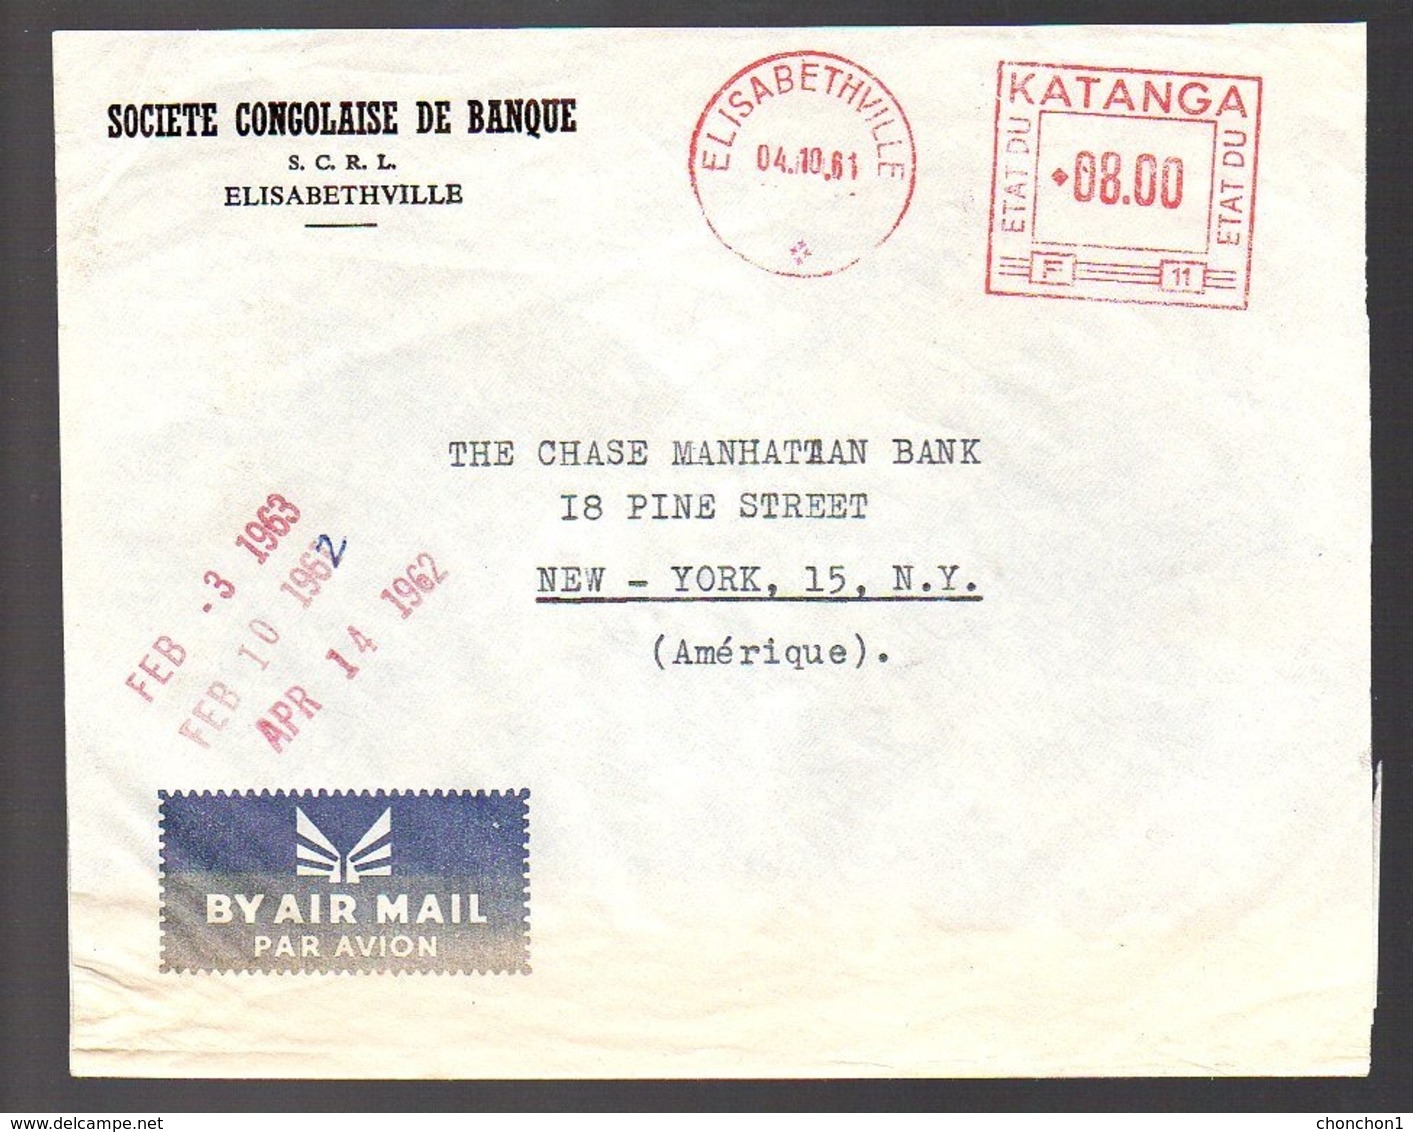 KATANGA  - F11 - AFFR MECANIQUE ROUGE - ELISABETHVILLE 1961  - UN6 - Katanga